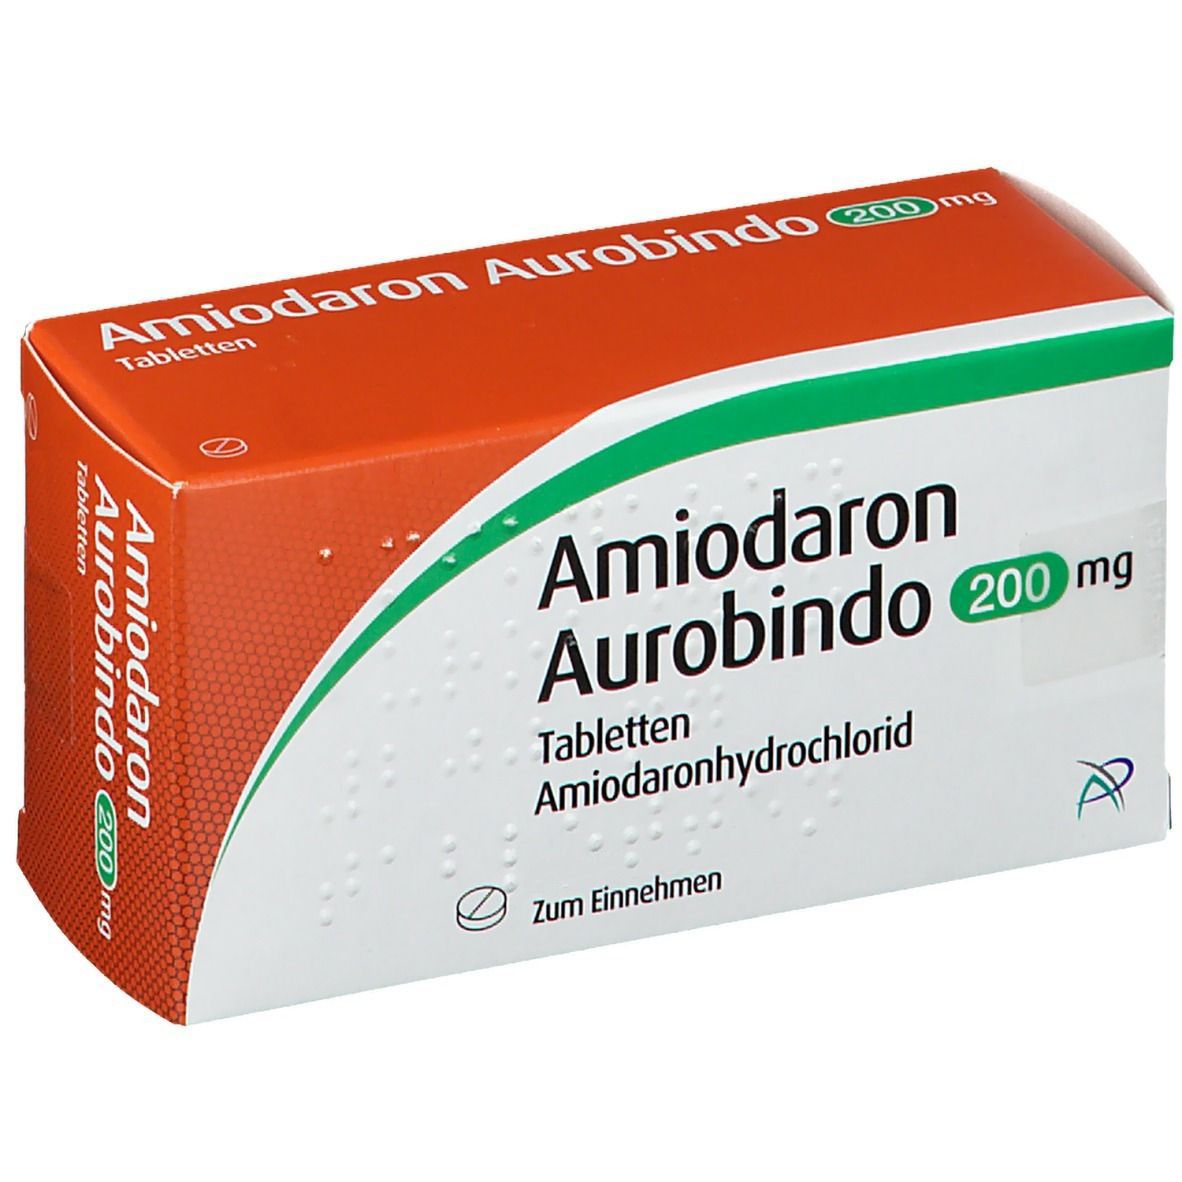 Amiodaron Aurobindo 200 mg